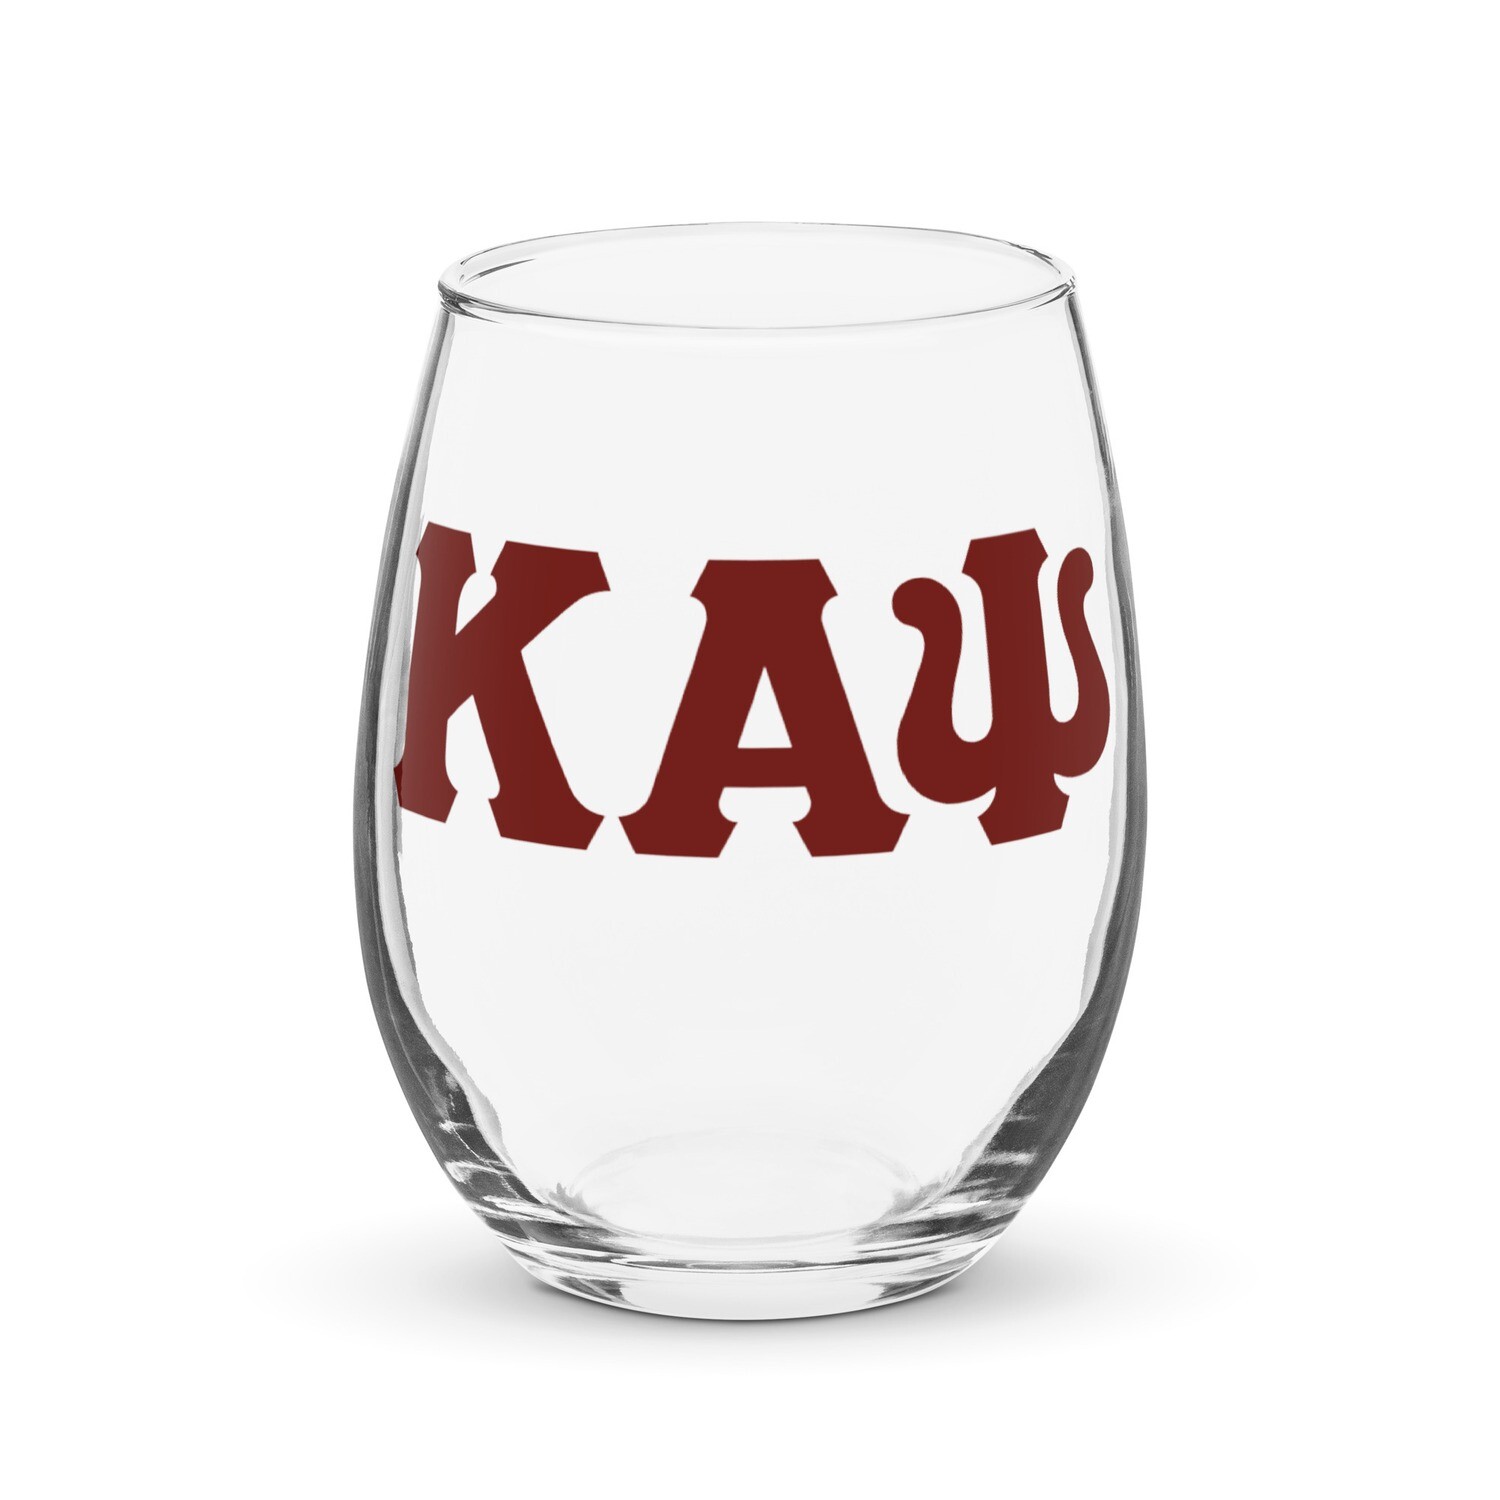 KAPsi Stemless wine glass